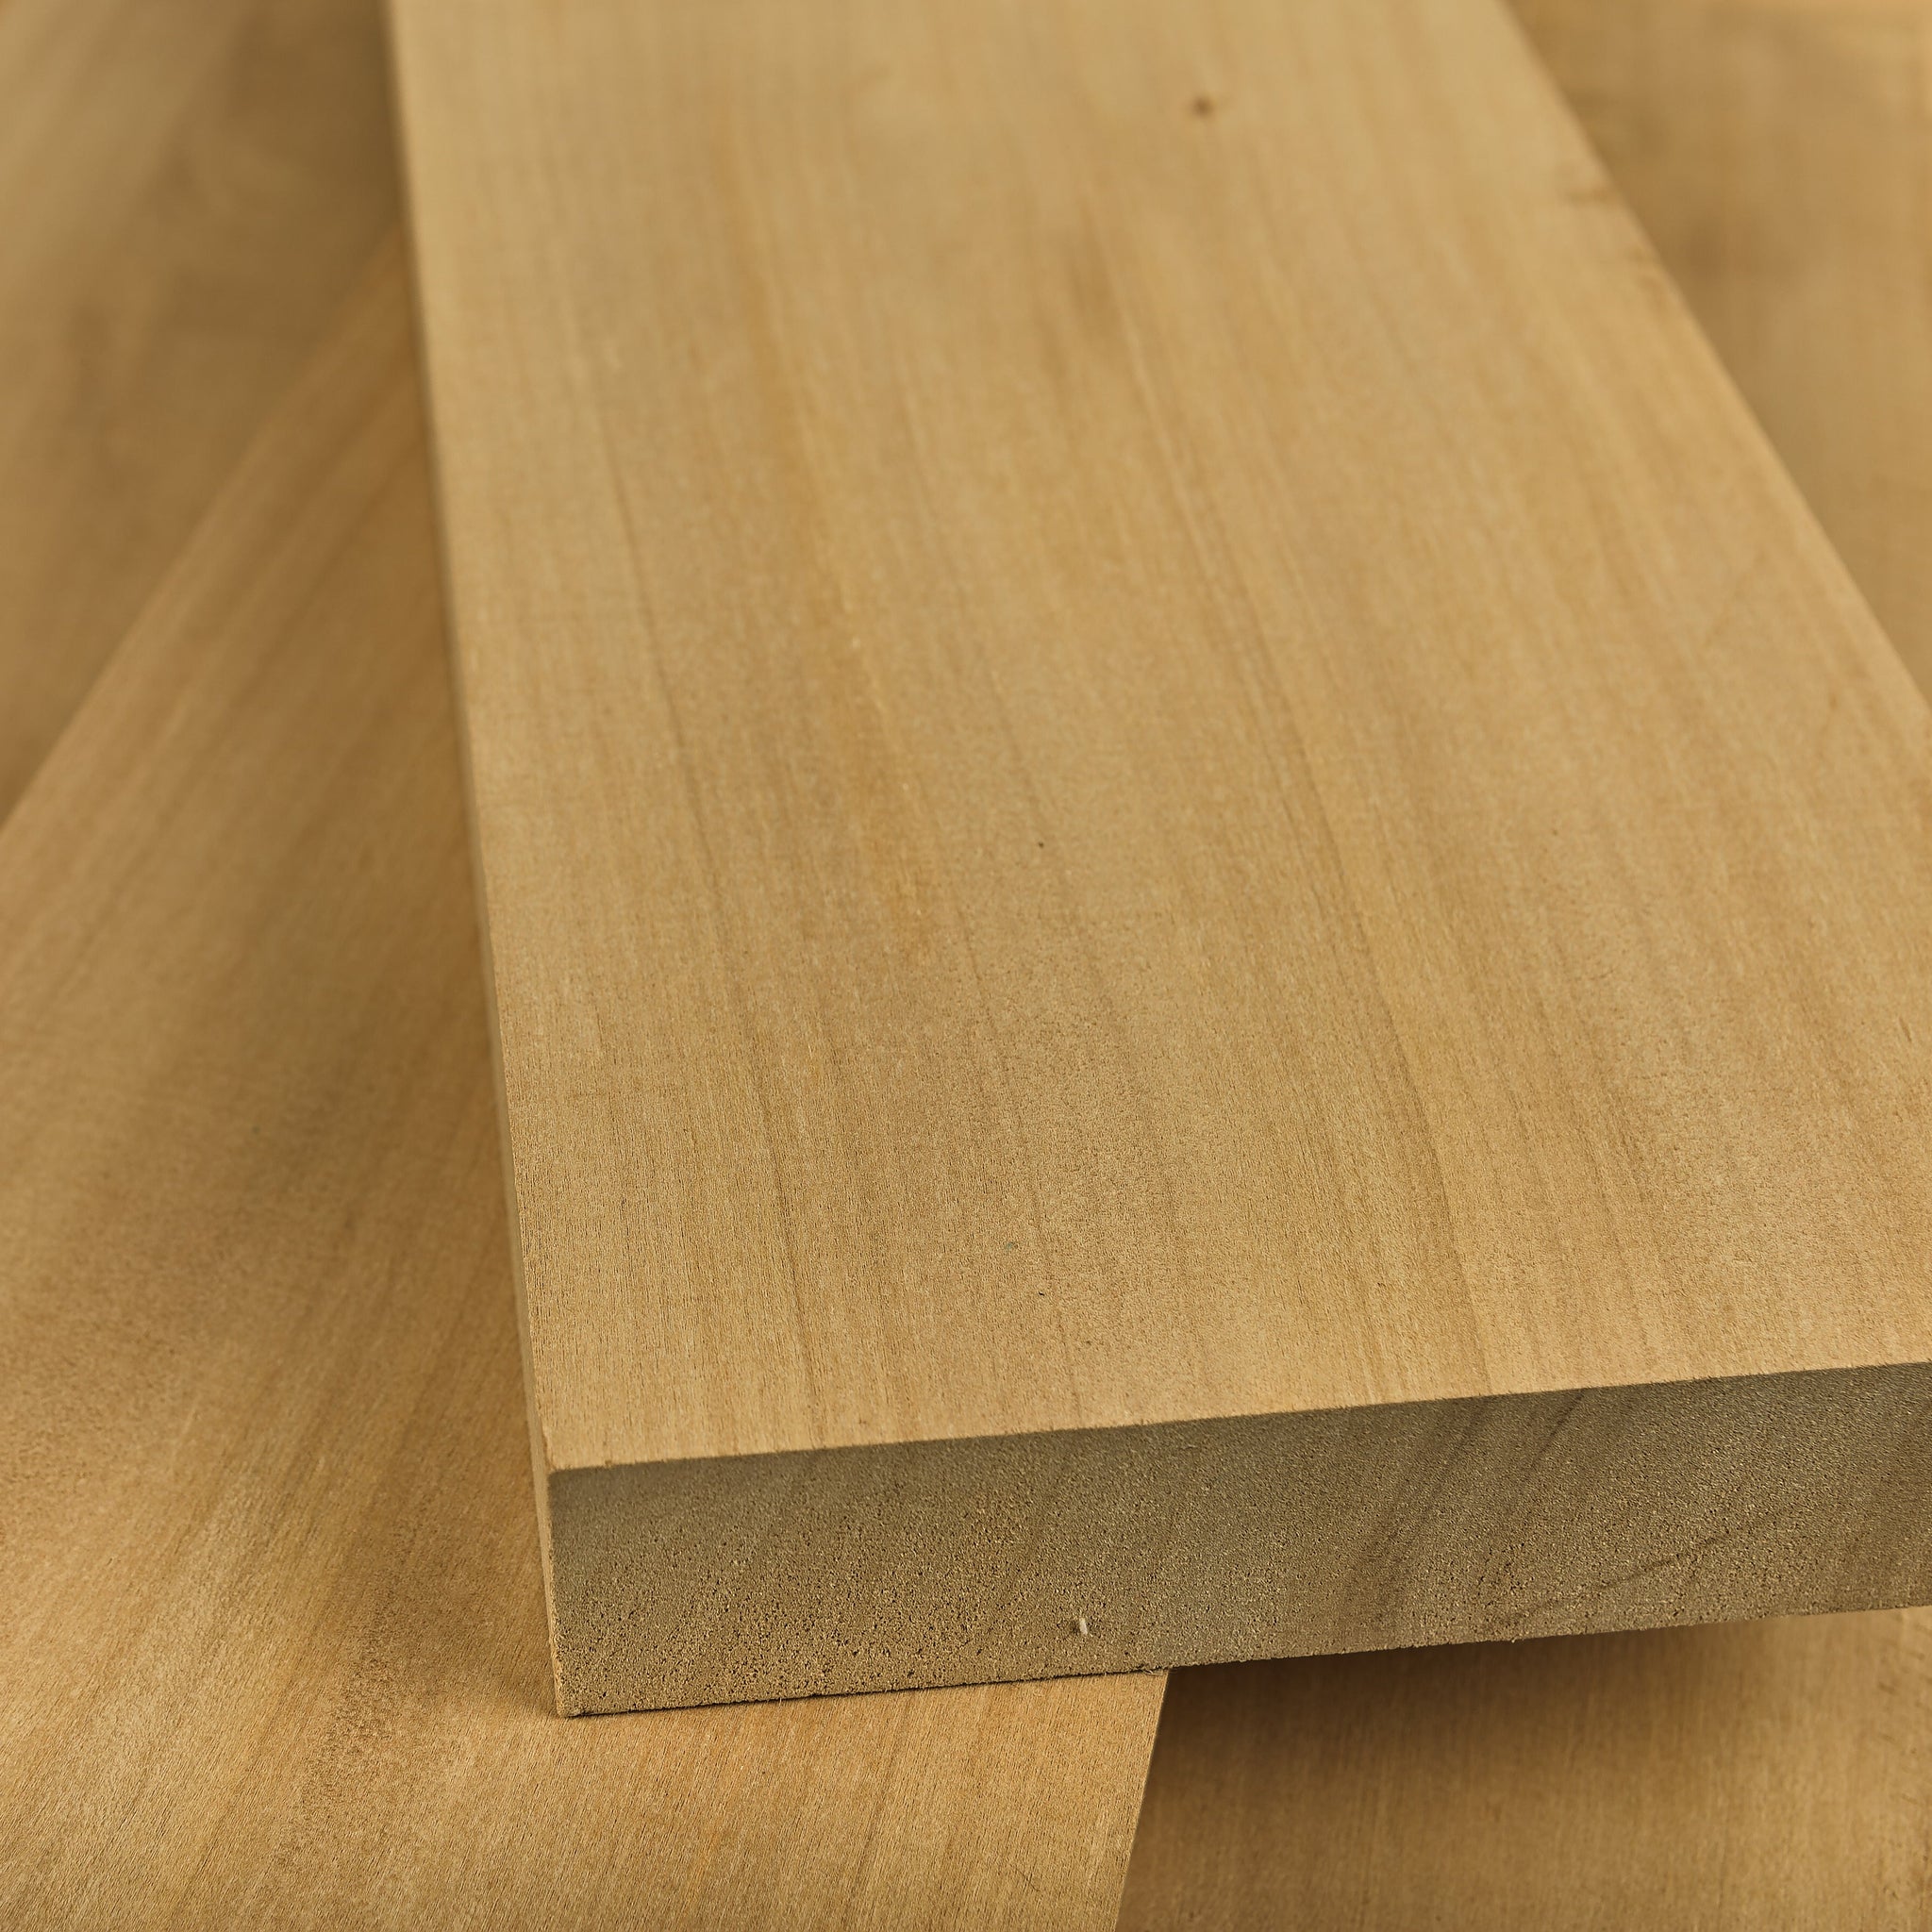 Abura wood plank